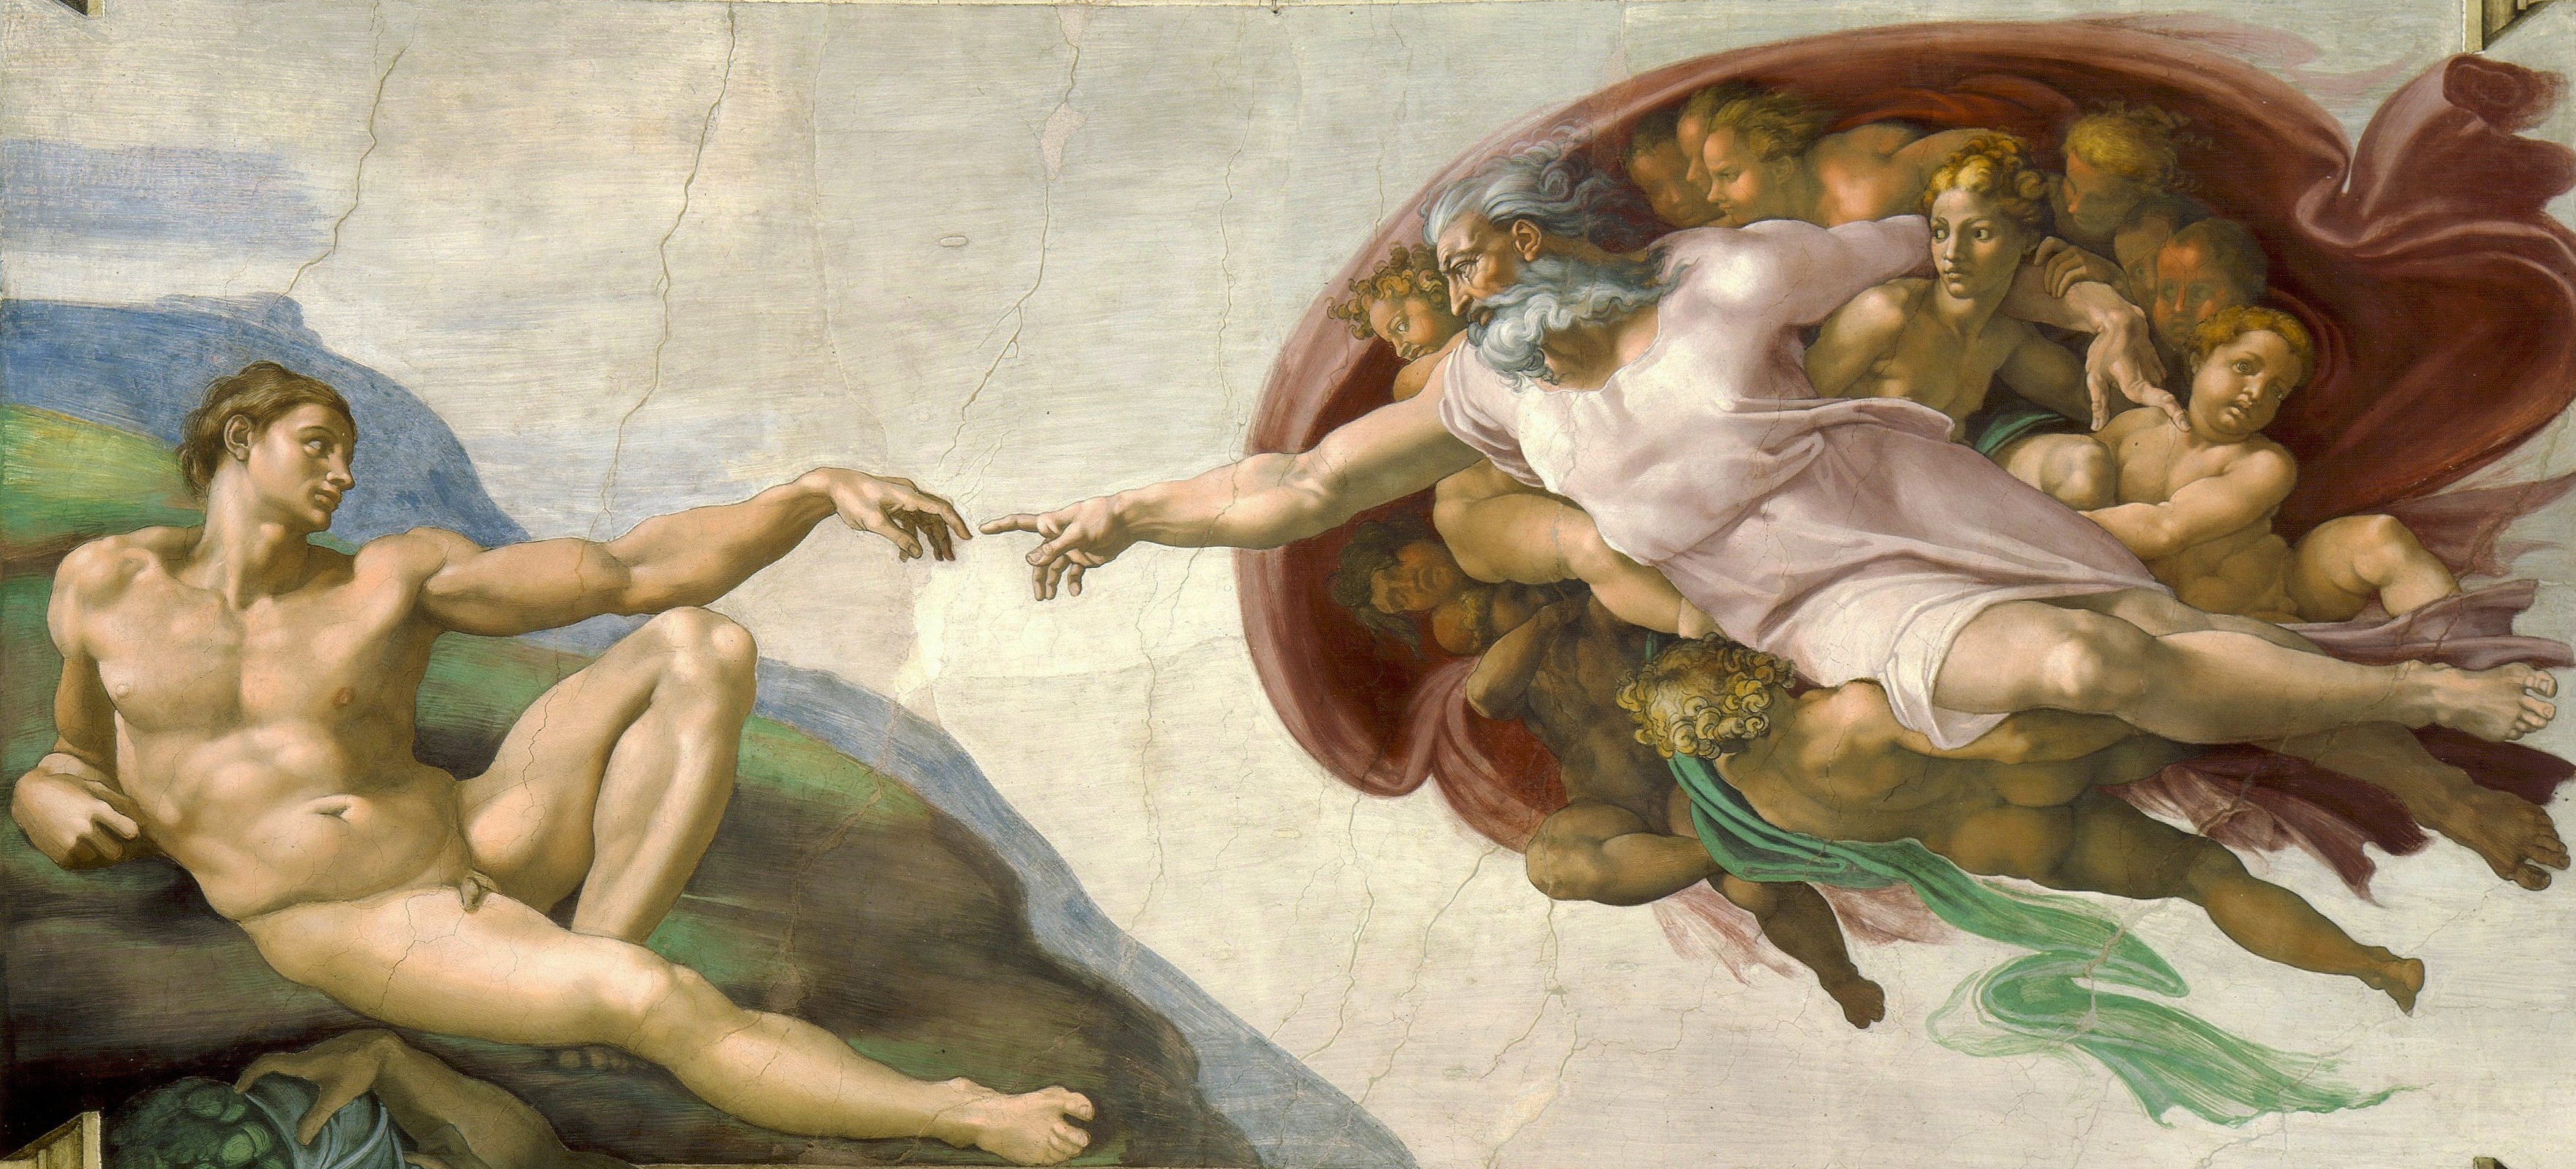 Detail of “The Creation of Adam,” between 1508-1512 by Michelangelo. Fresco, Sistine Chapel, Vatican. 